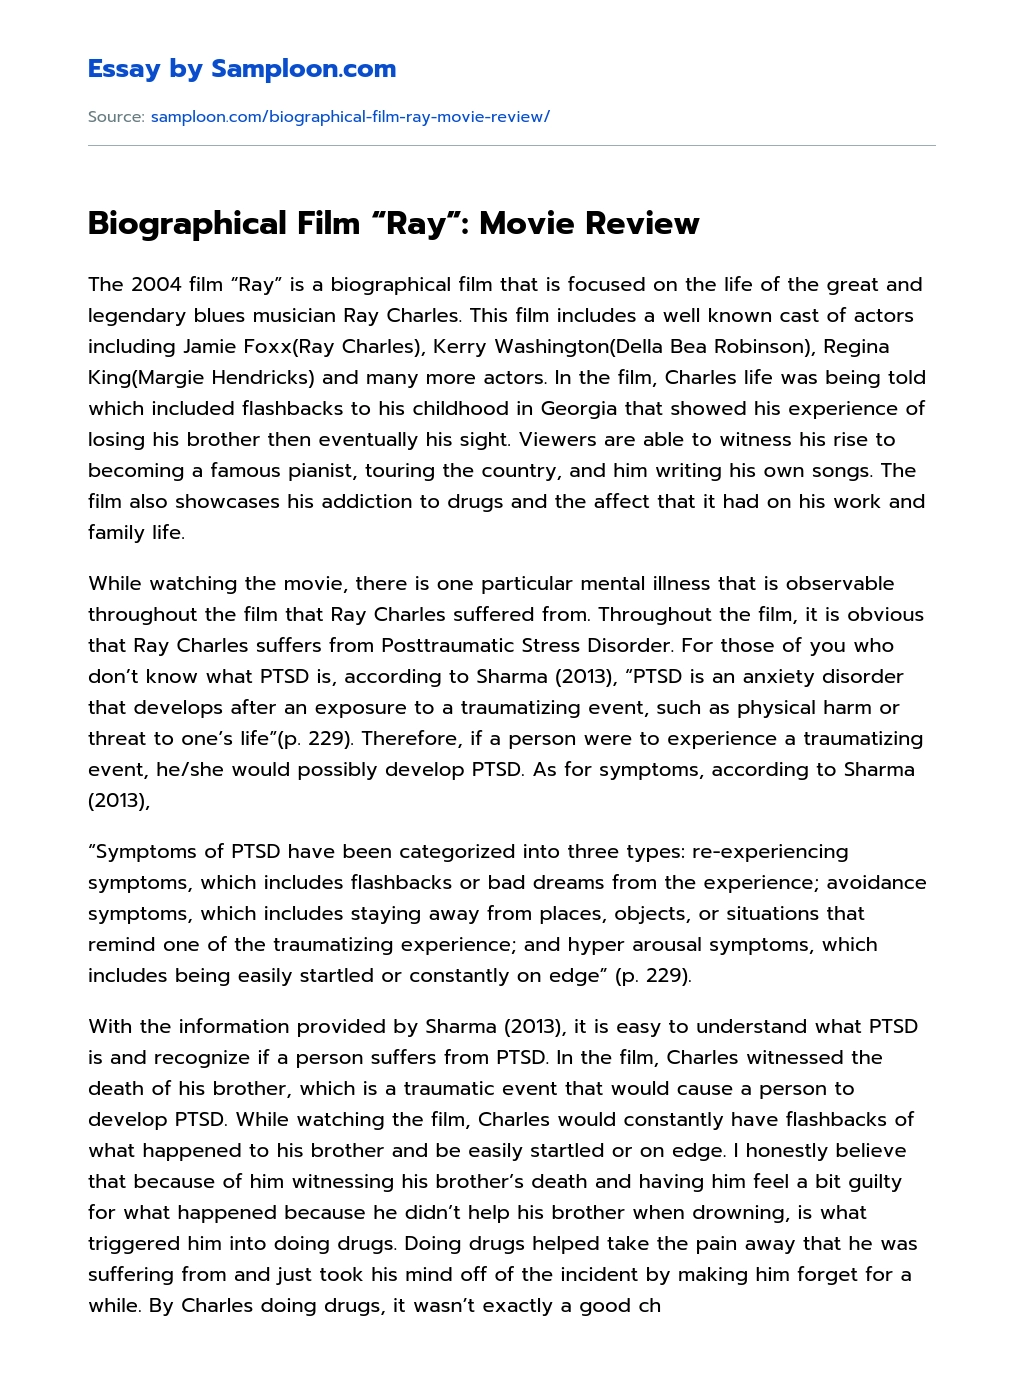 Biographical Film “Ray”: Movie Review Movie Analysis essay